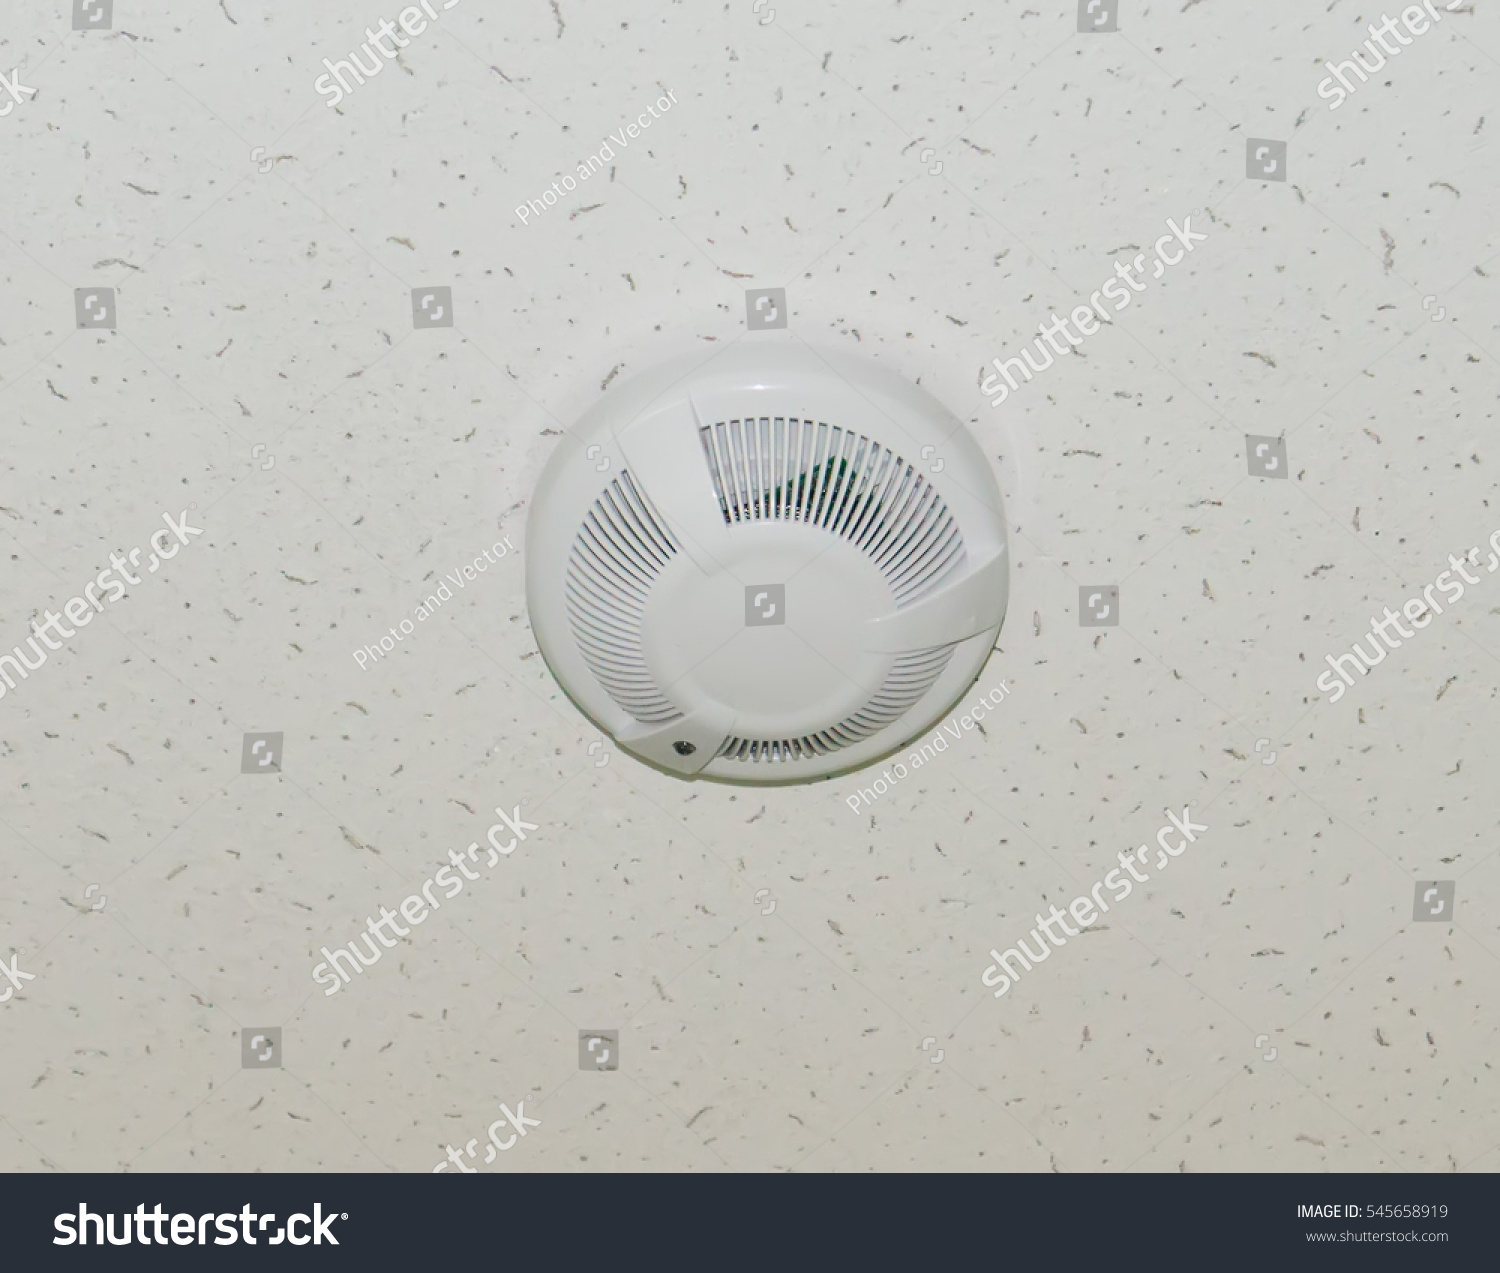 Fire Alarm On Ceiling Smoke Detectors Stock Photo Edit Now 545658919